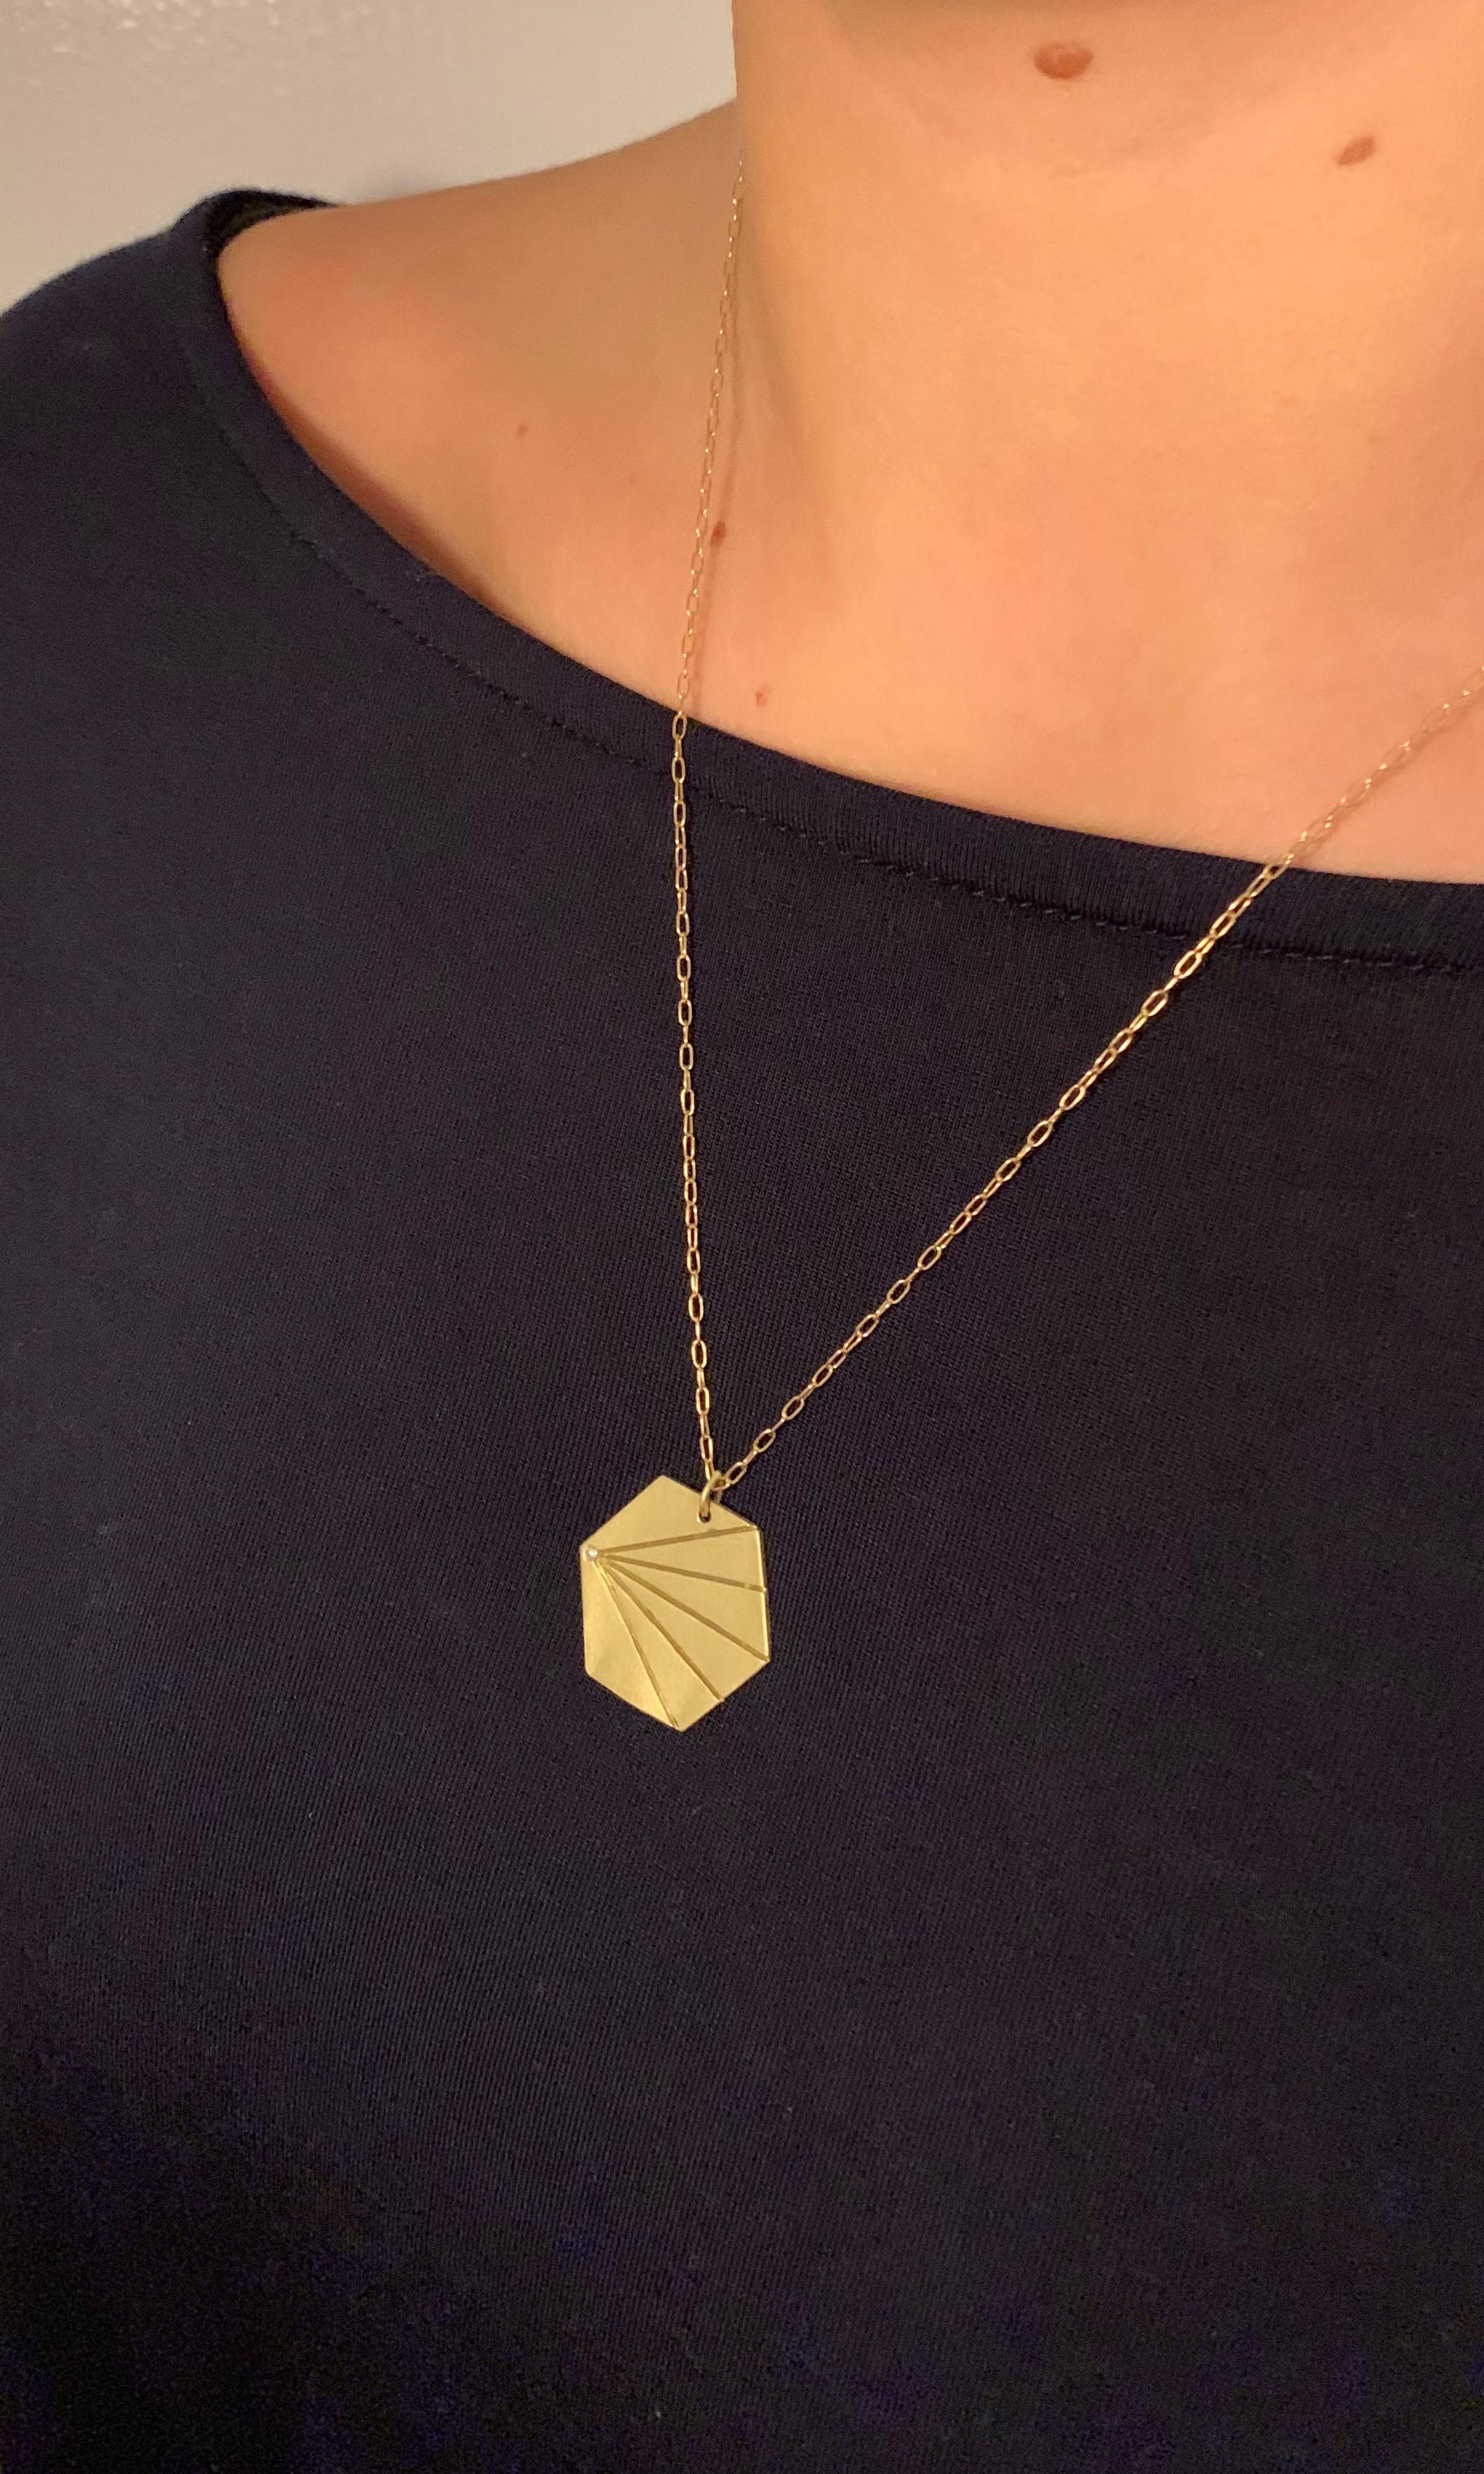 hexagon necklace pendant